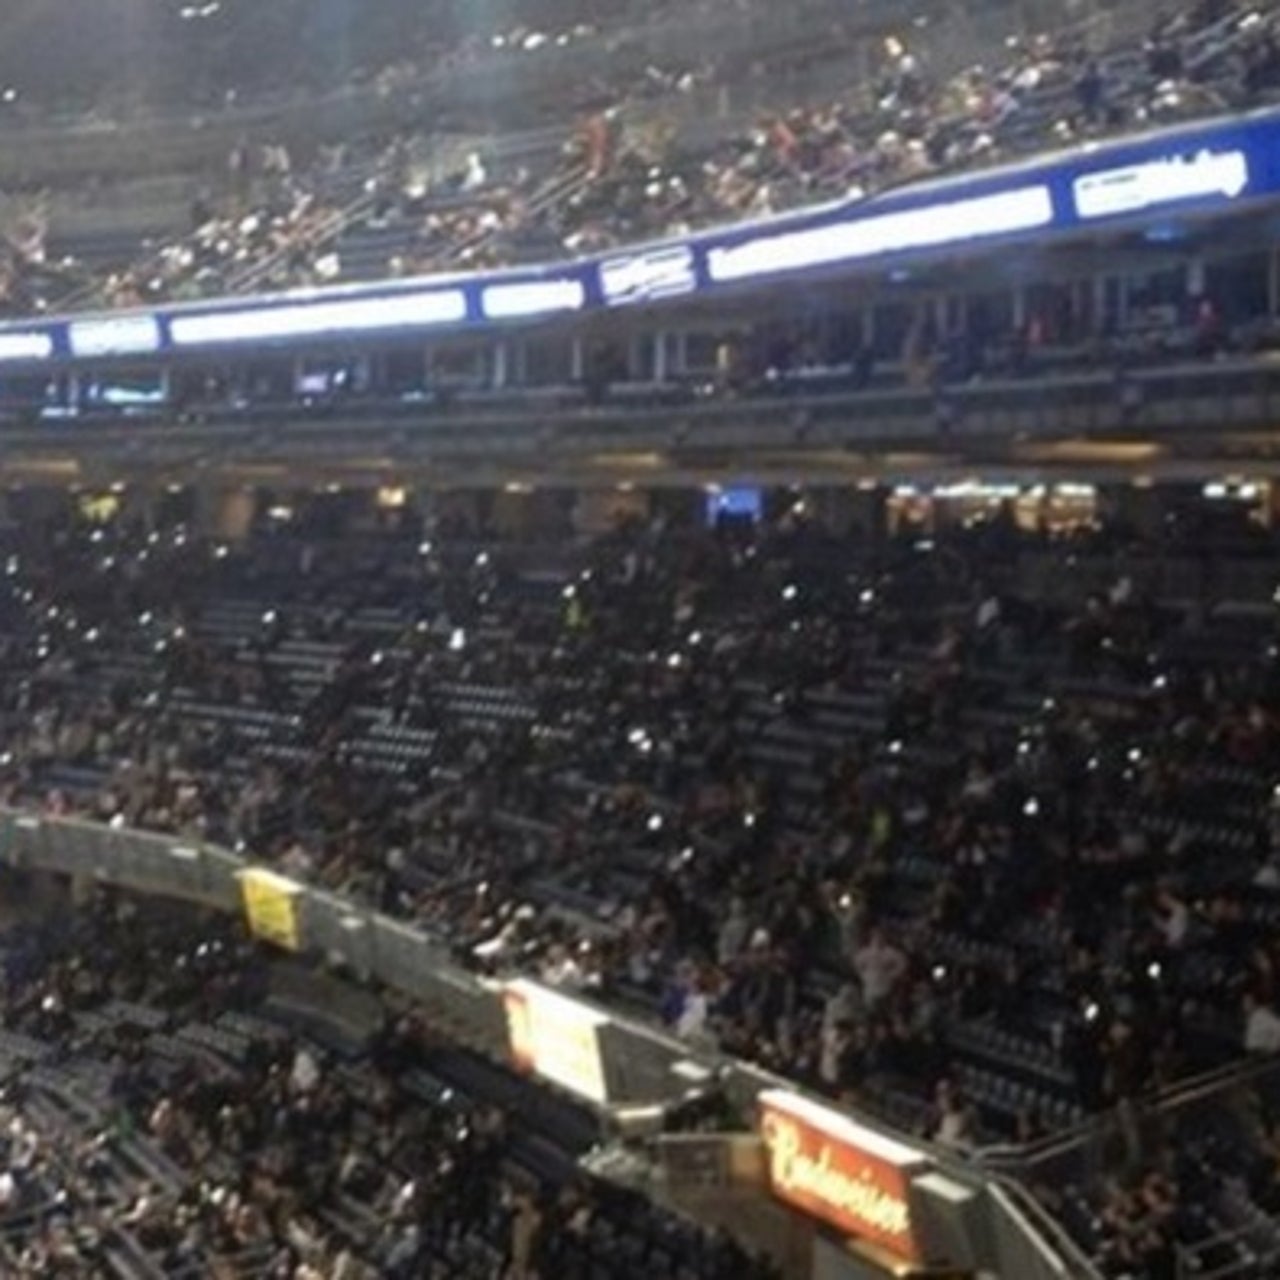 Fans turn cellphone lights on baseball team, NewsCut